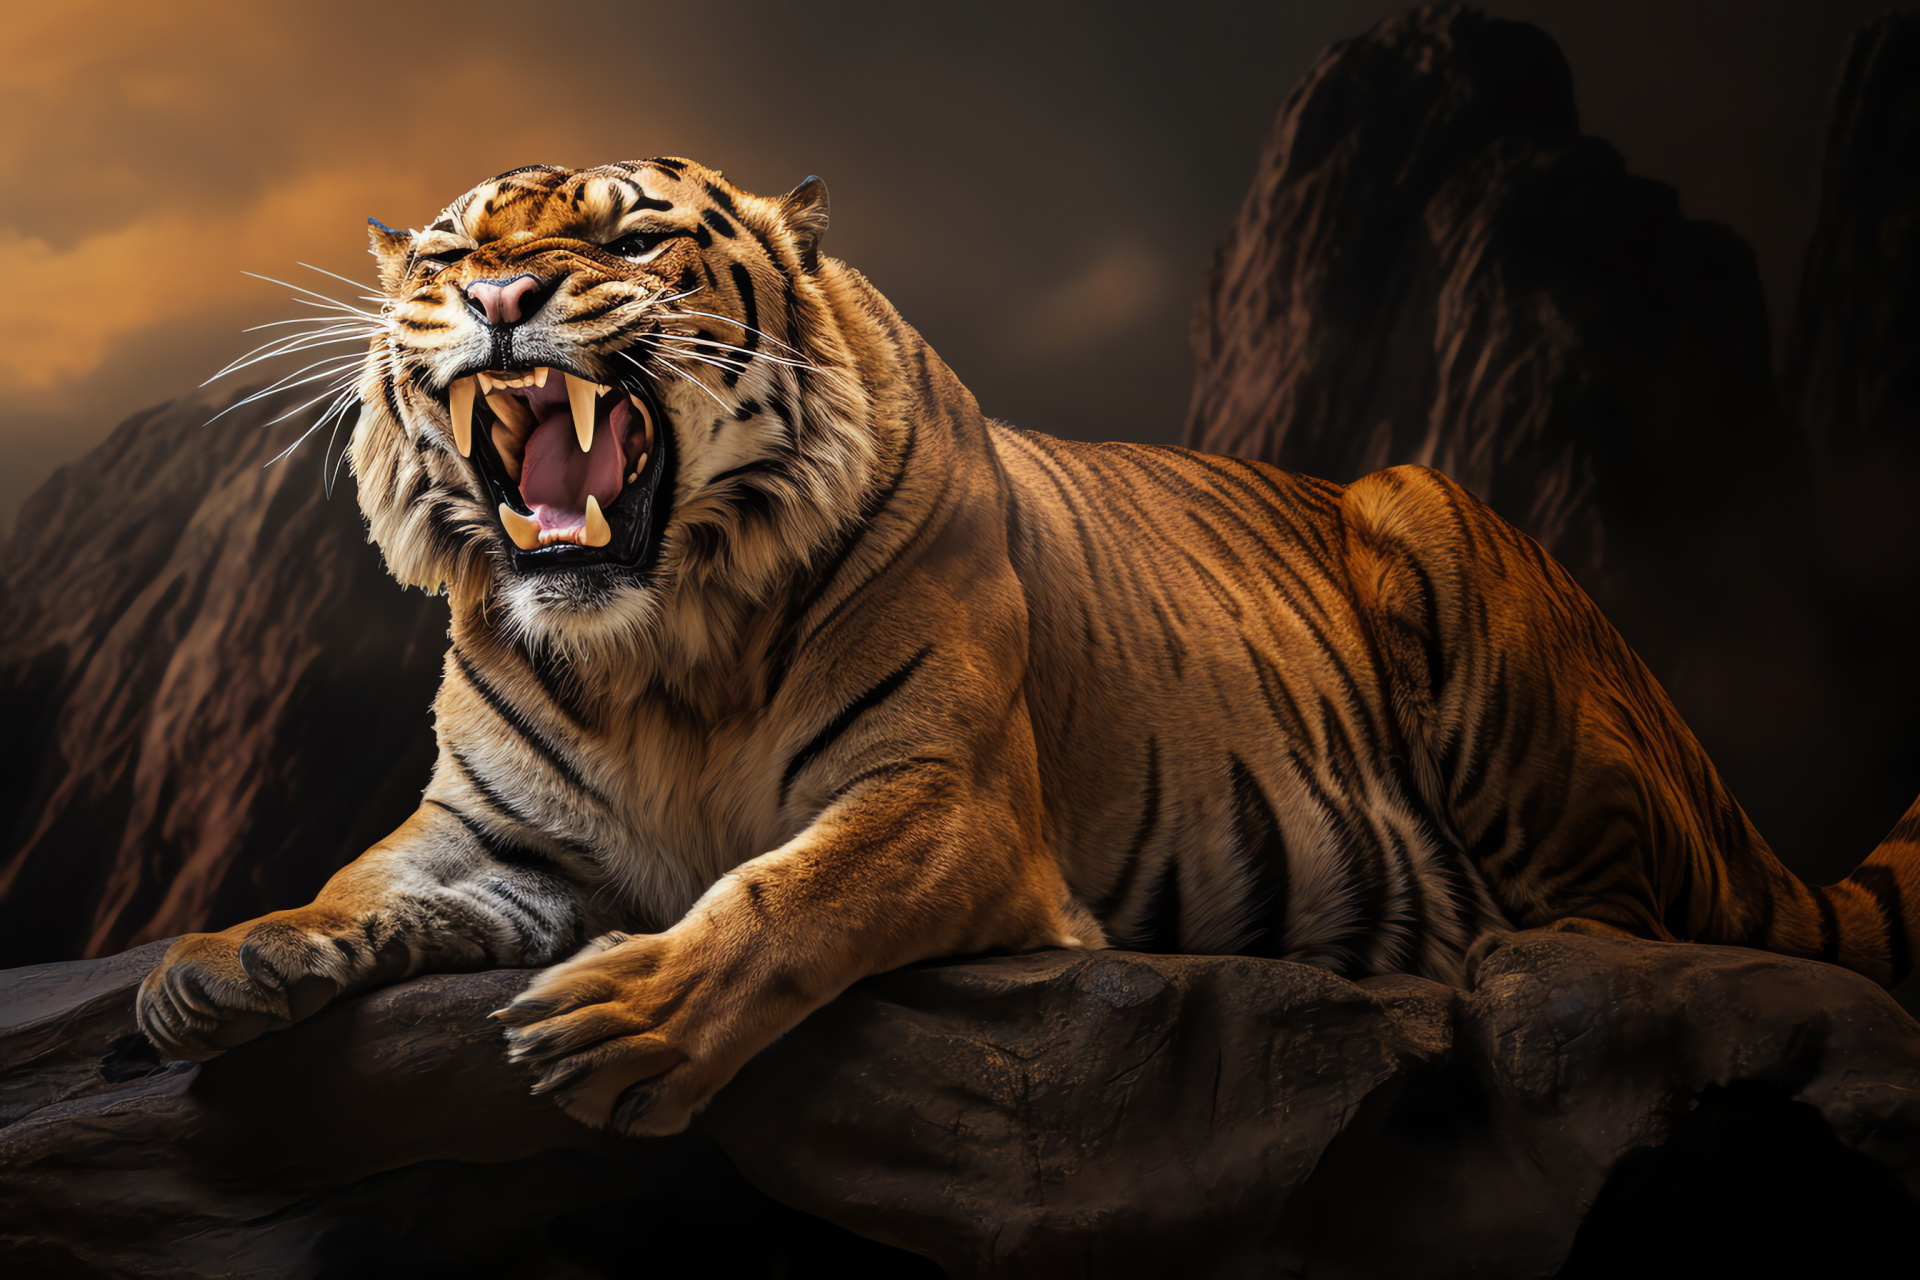 Saber Tooth Tiger, richly colored fur, triple-color backdrop, extinct carnivore, ancient grandeur, HD Desktop Image